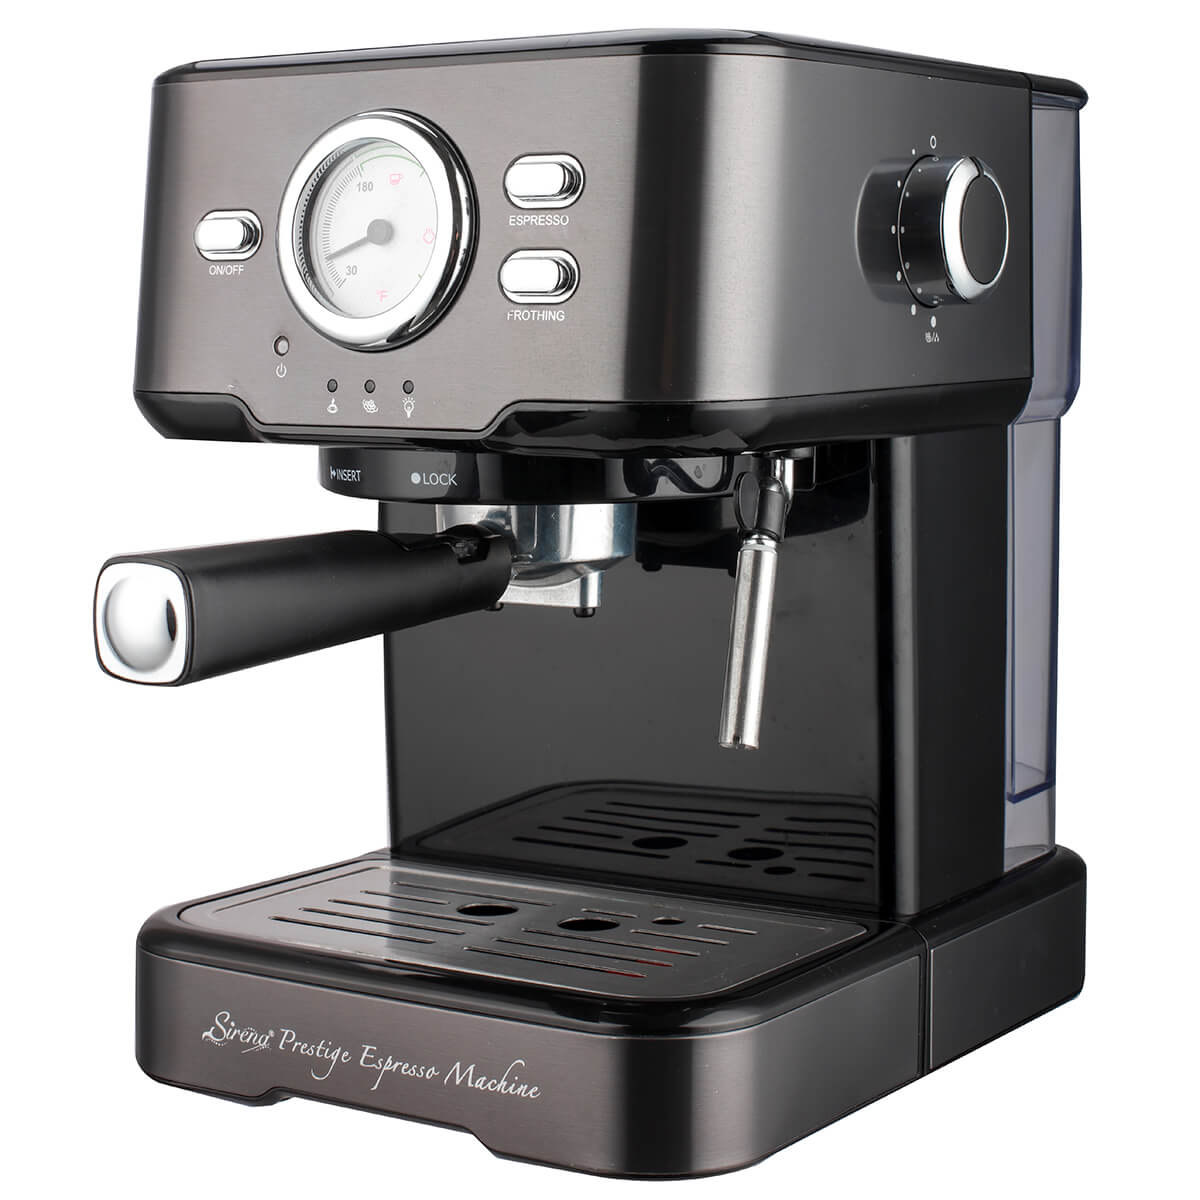  Kwister Espresso Machine 15 Bar, Espresso and